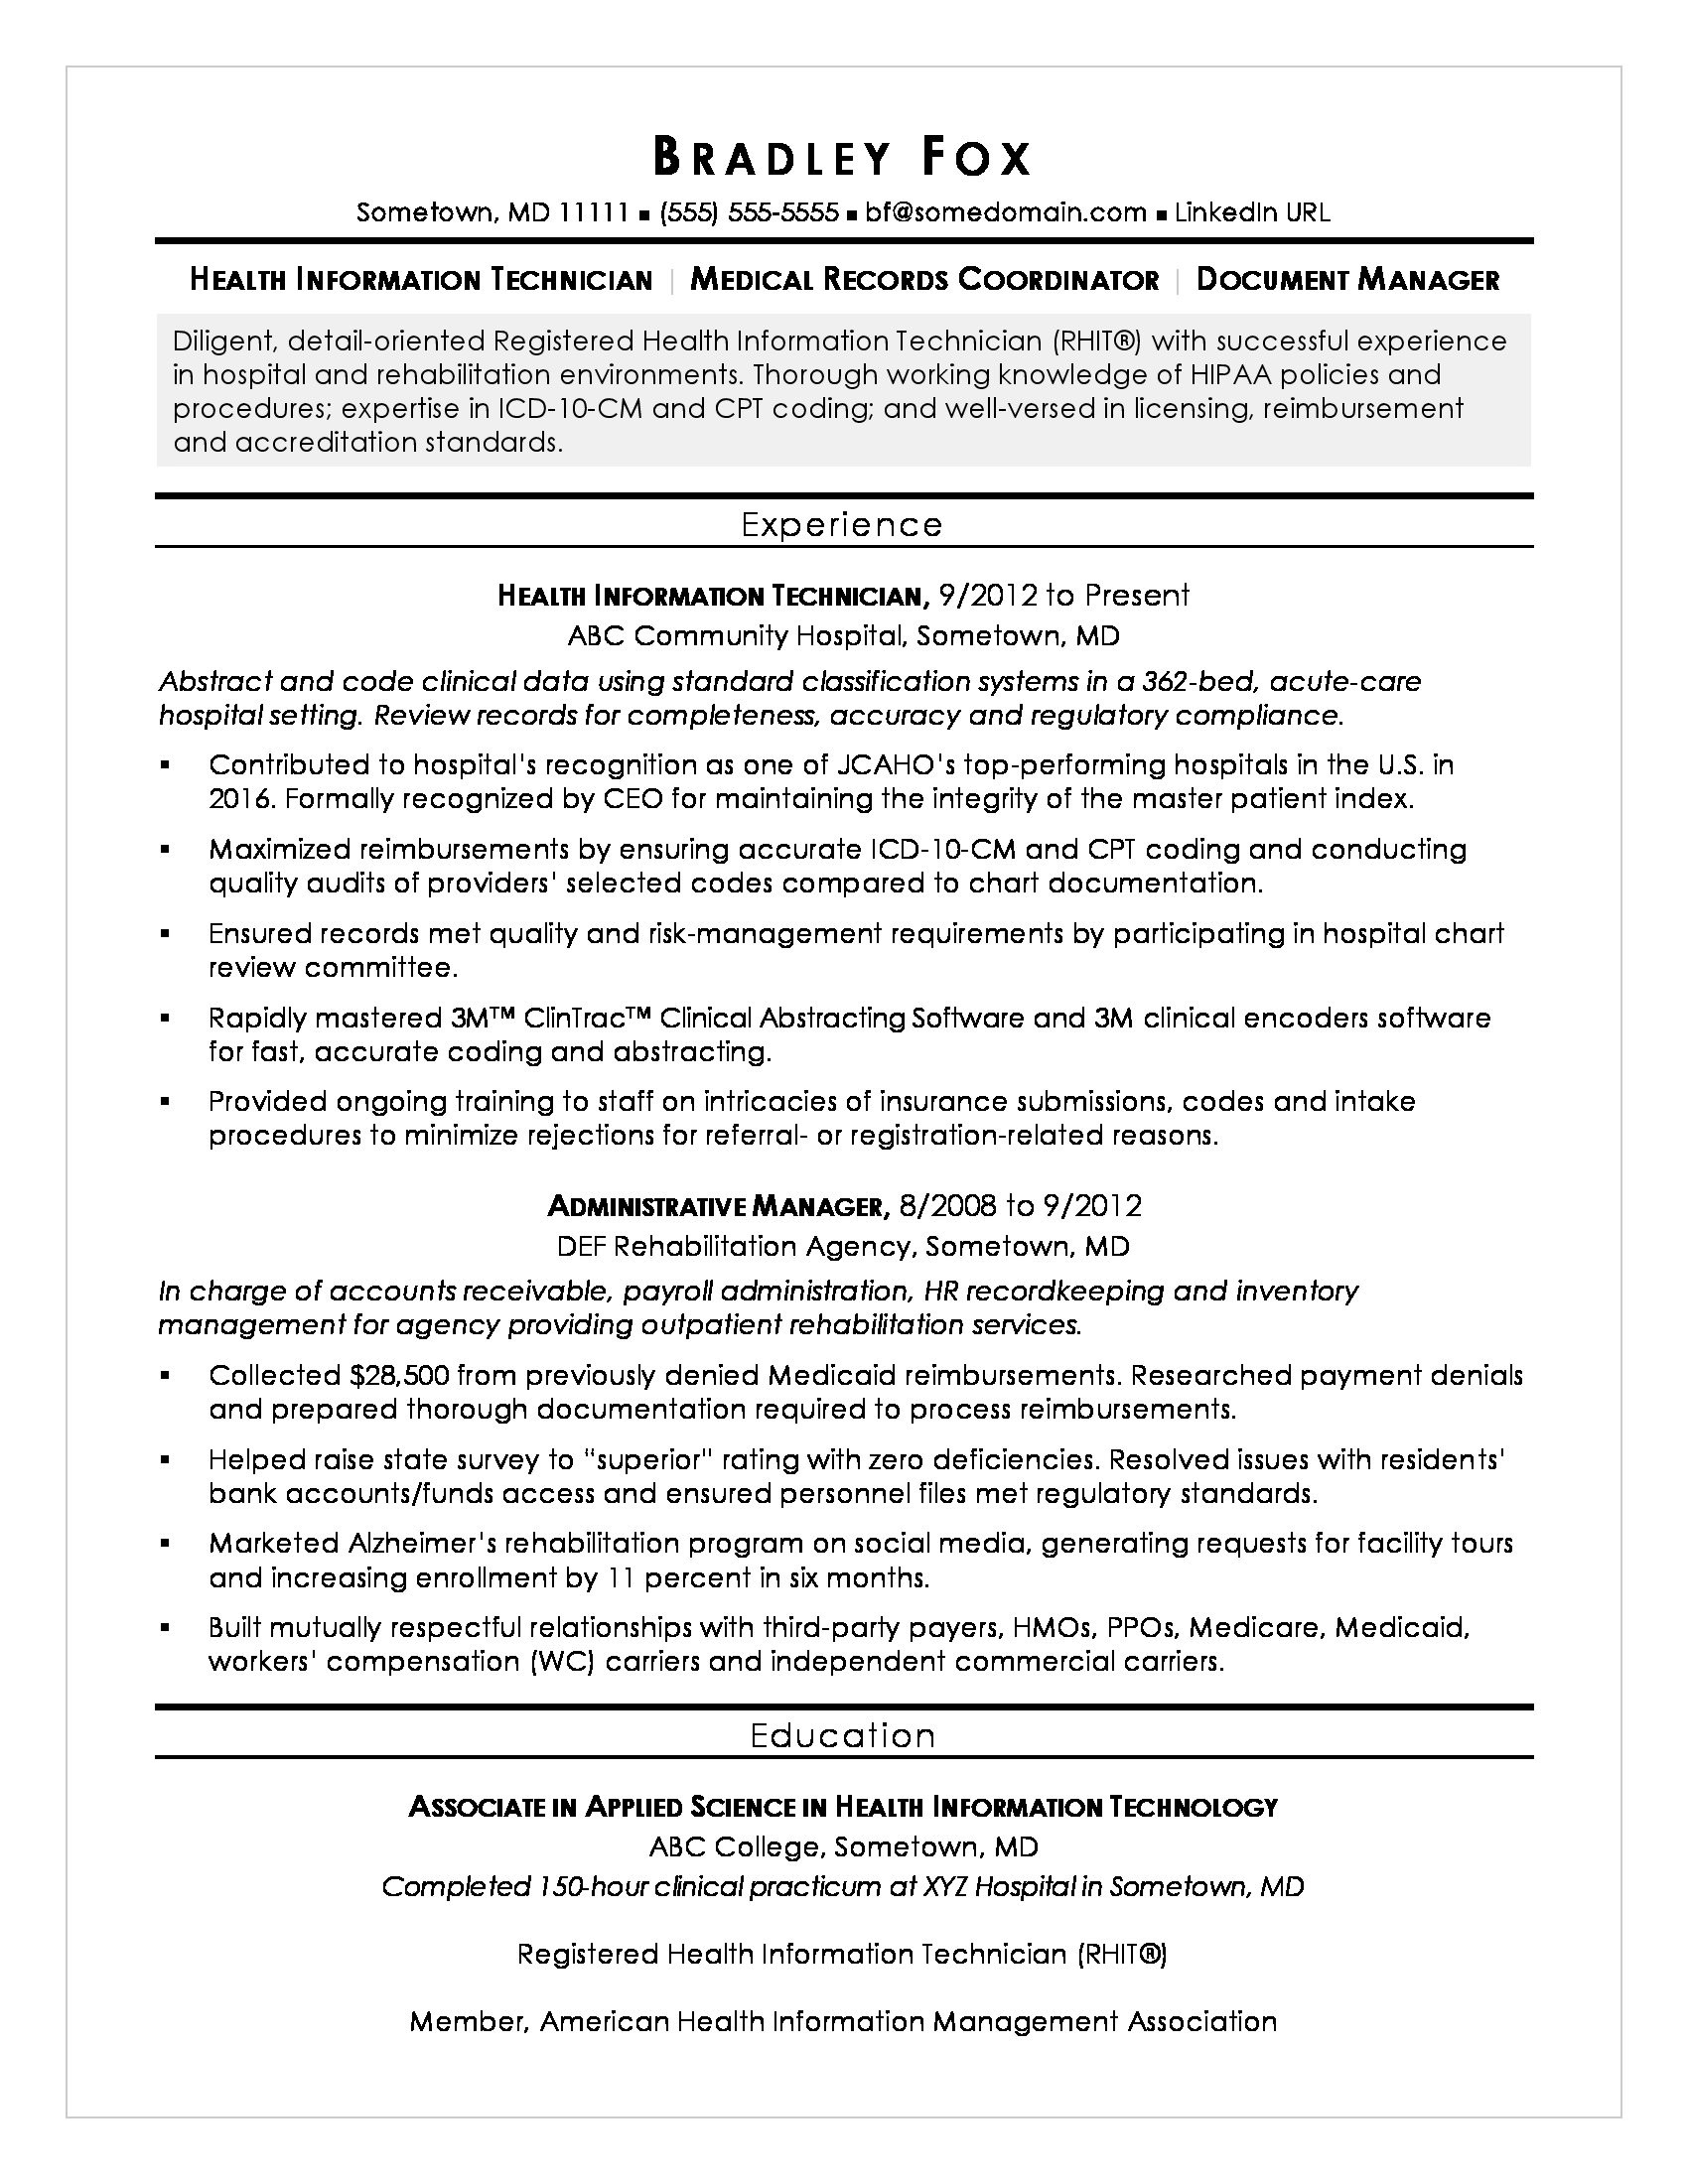 Sample Resume for Ms In Us Information assurance Health Information Technician Sample Resume Monster.com